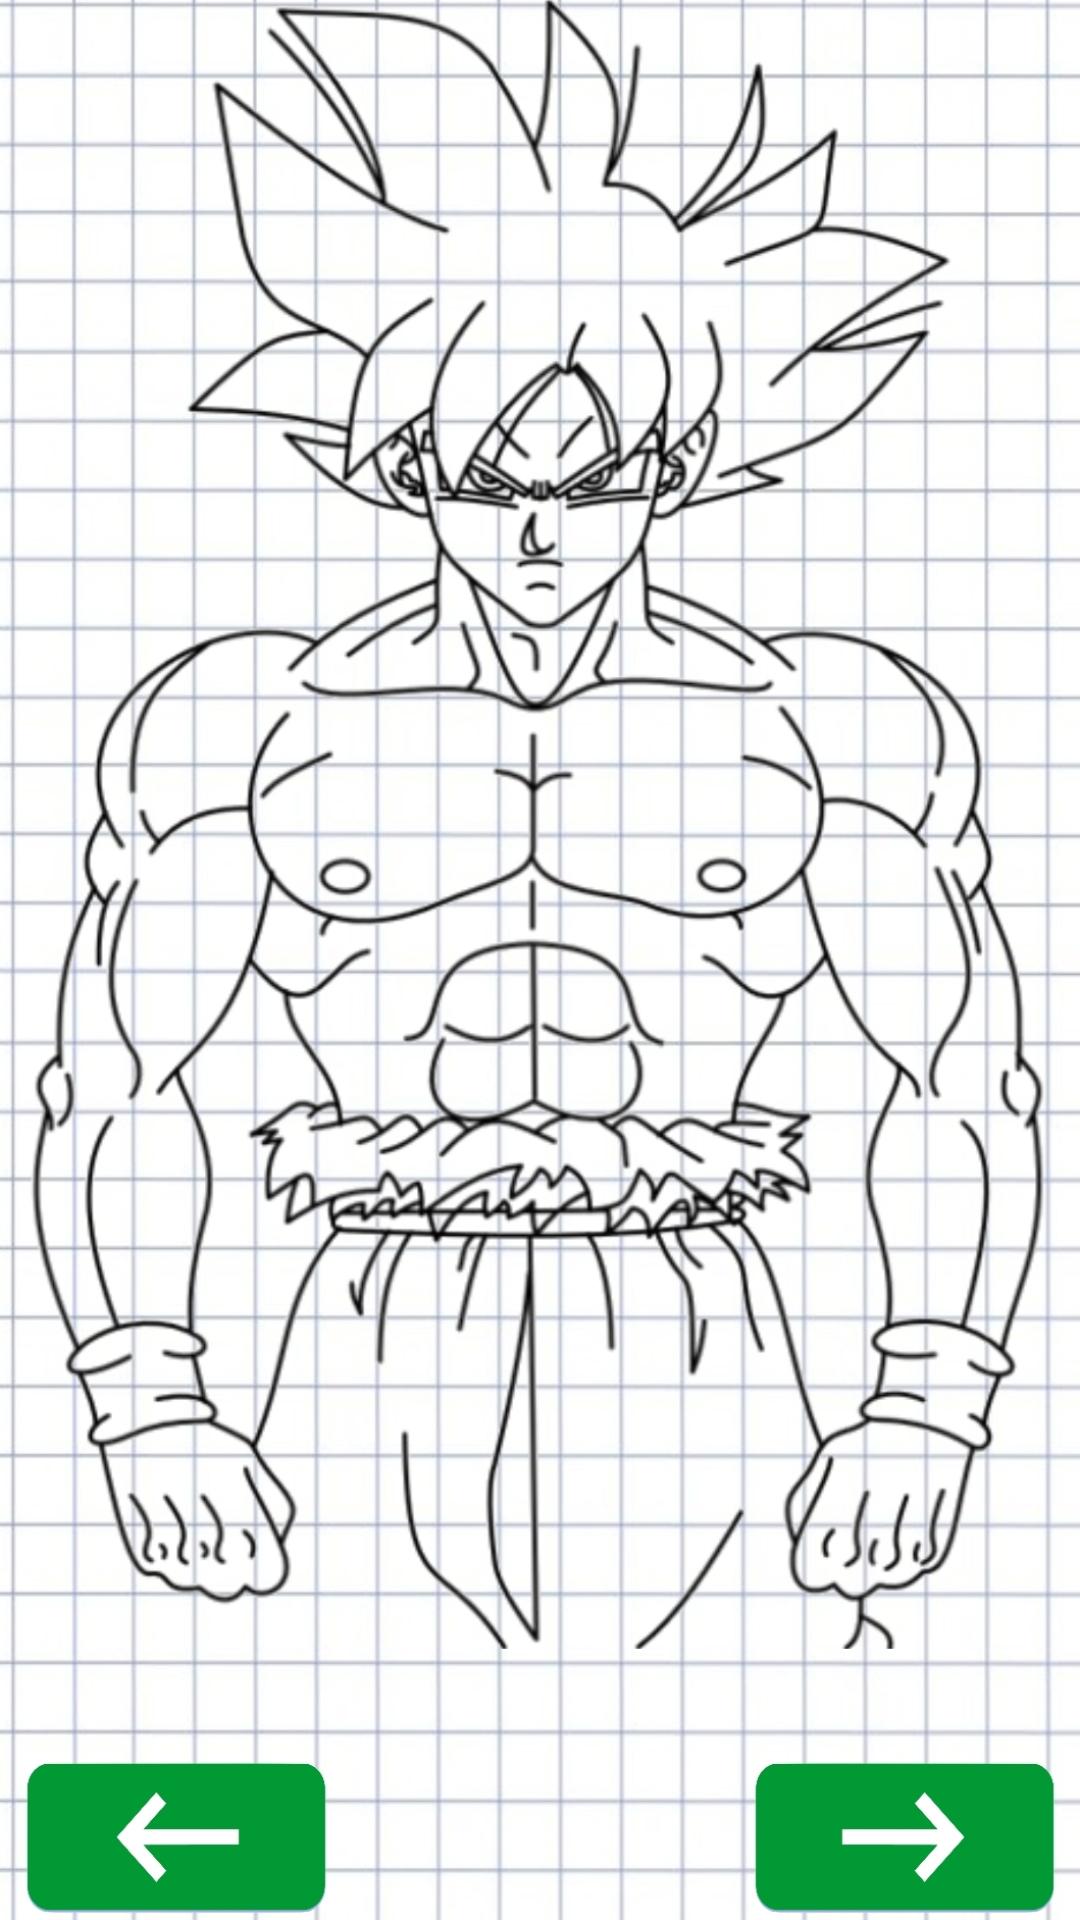 Descarga de APK de Cómo dibujar a Goku para Android